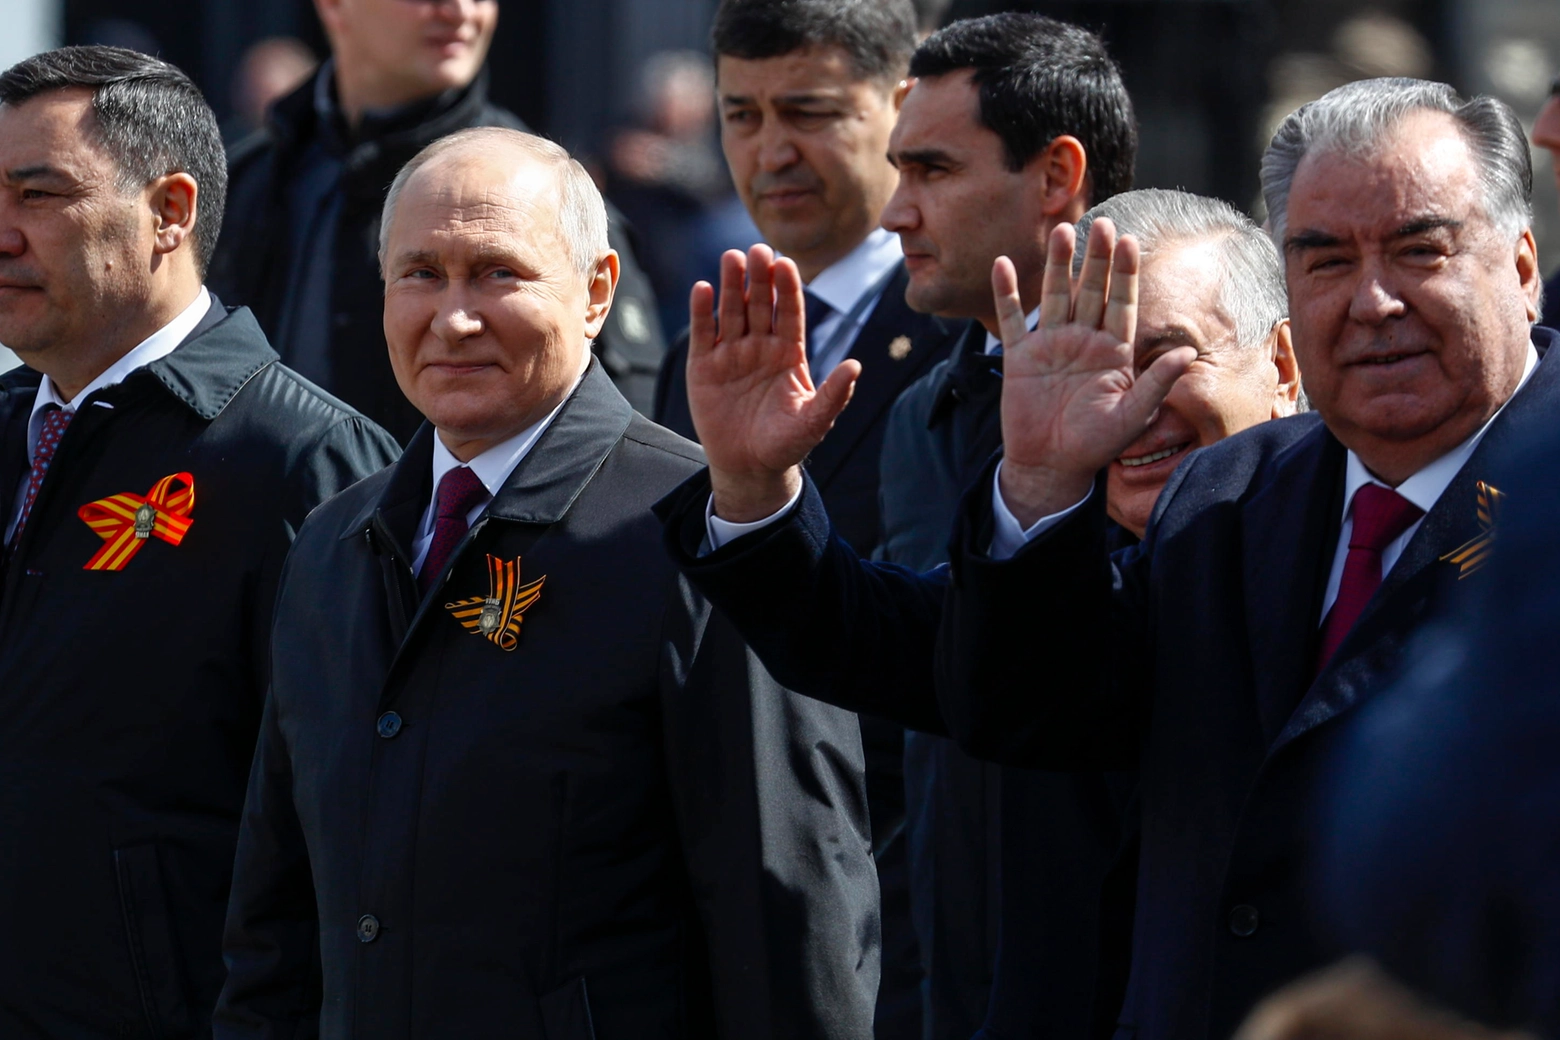 Putin alla 'parata della vittoria' con i presidenti di Kyrgyzstan, Uzbekistan e Tajikistan (Ansa)